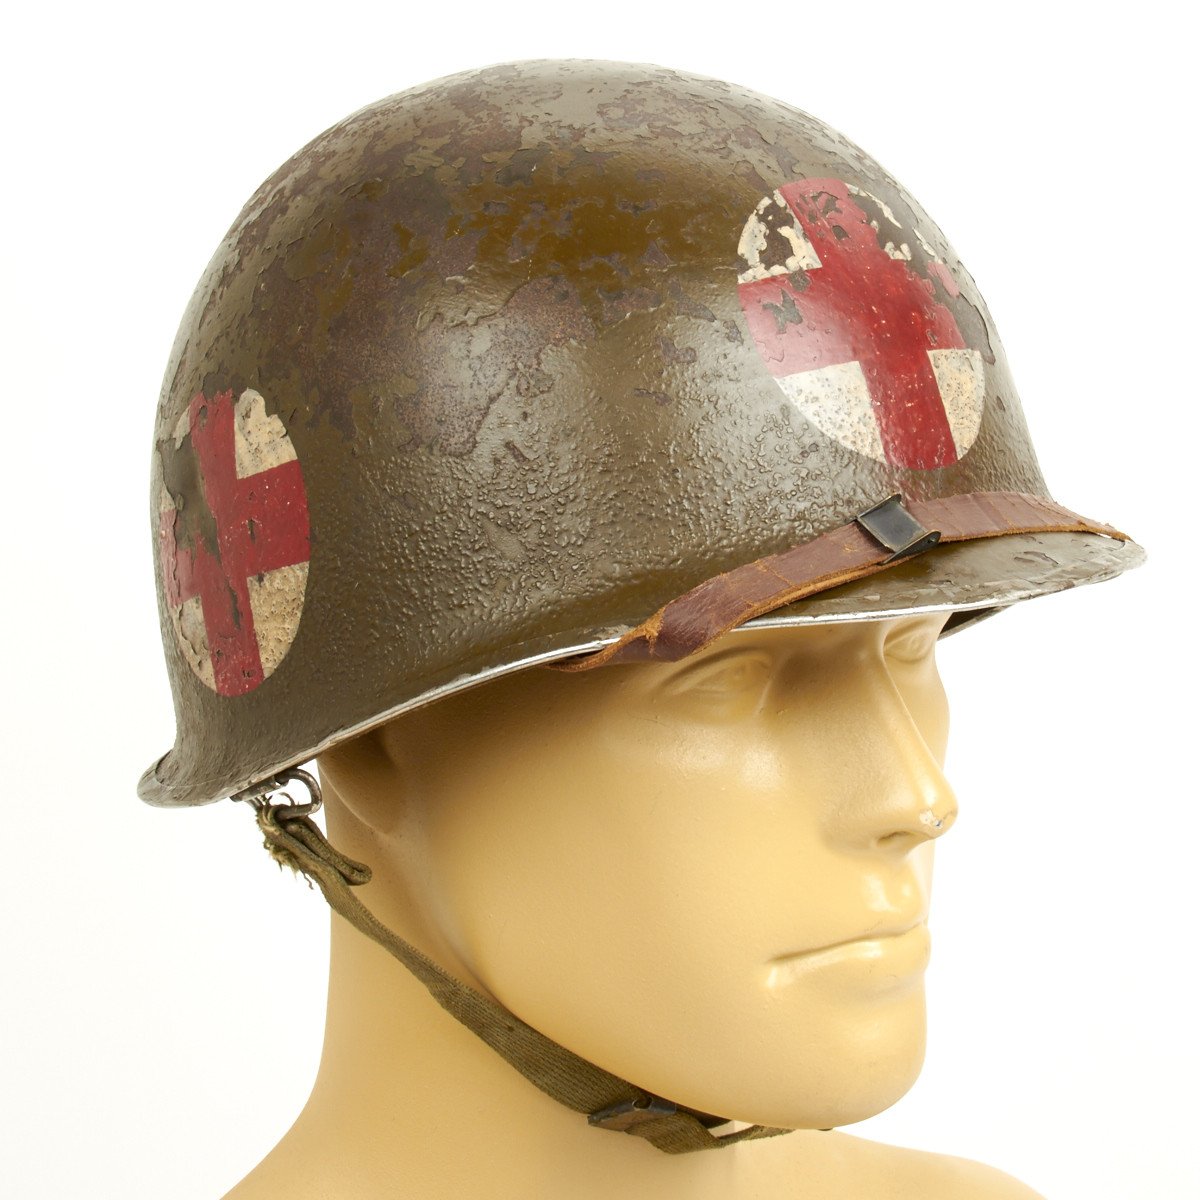 Ww2 M1 Medic Helmet Helmet - retro space helmet roblox